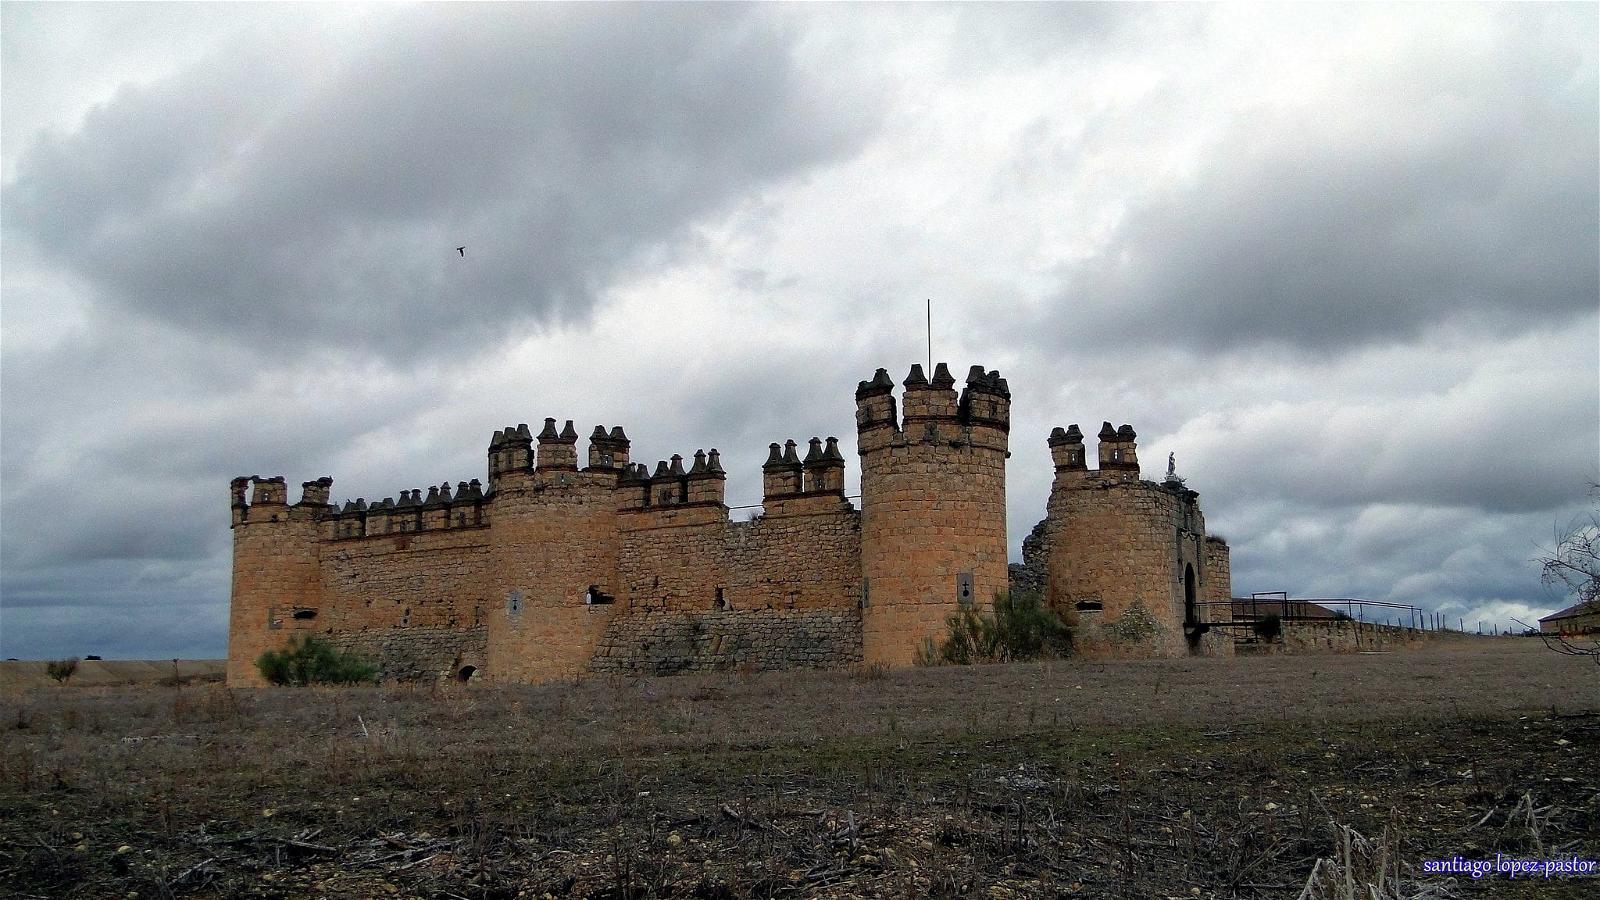 Bild von Castillo de San Silvestre. españa castle spain medieval toledo espagne middleages castillo chateaux castilla castillalamancha provinciadetoledo